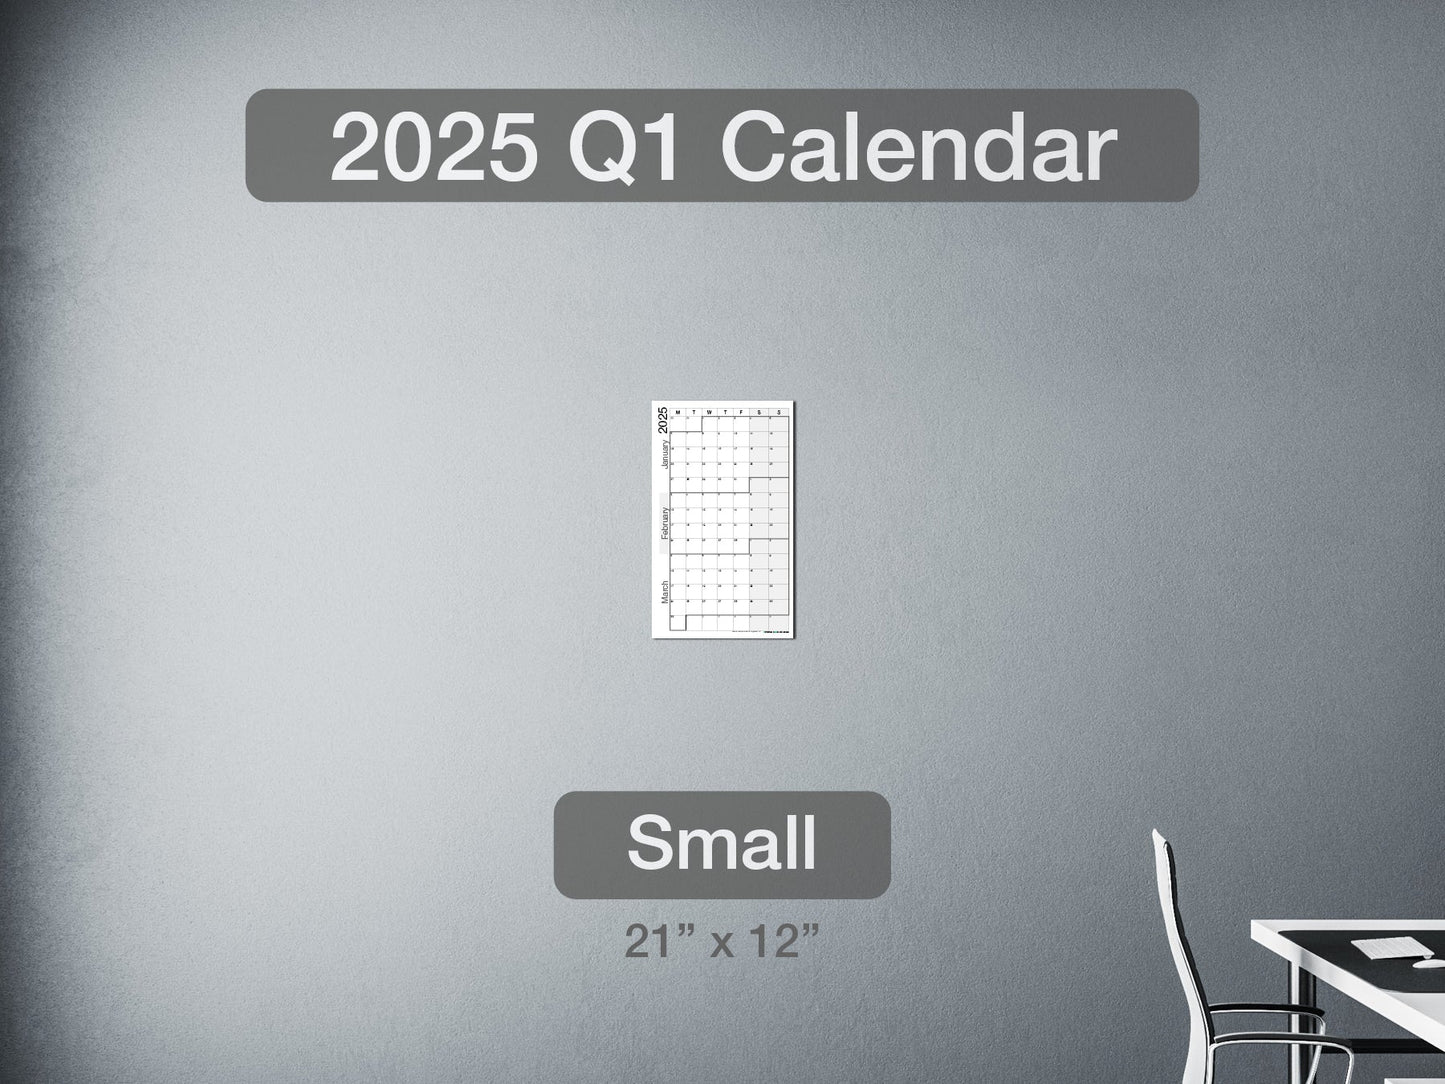 2025 Q1 Calendar Small